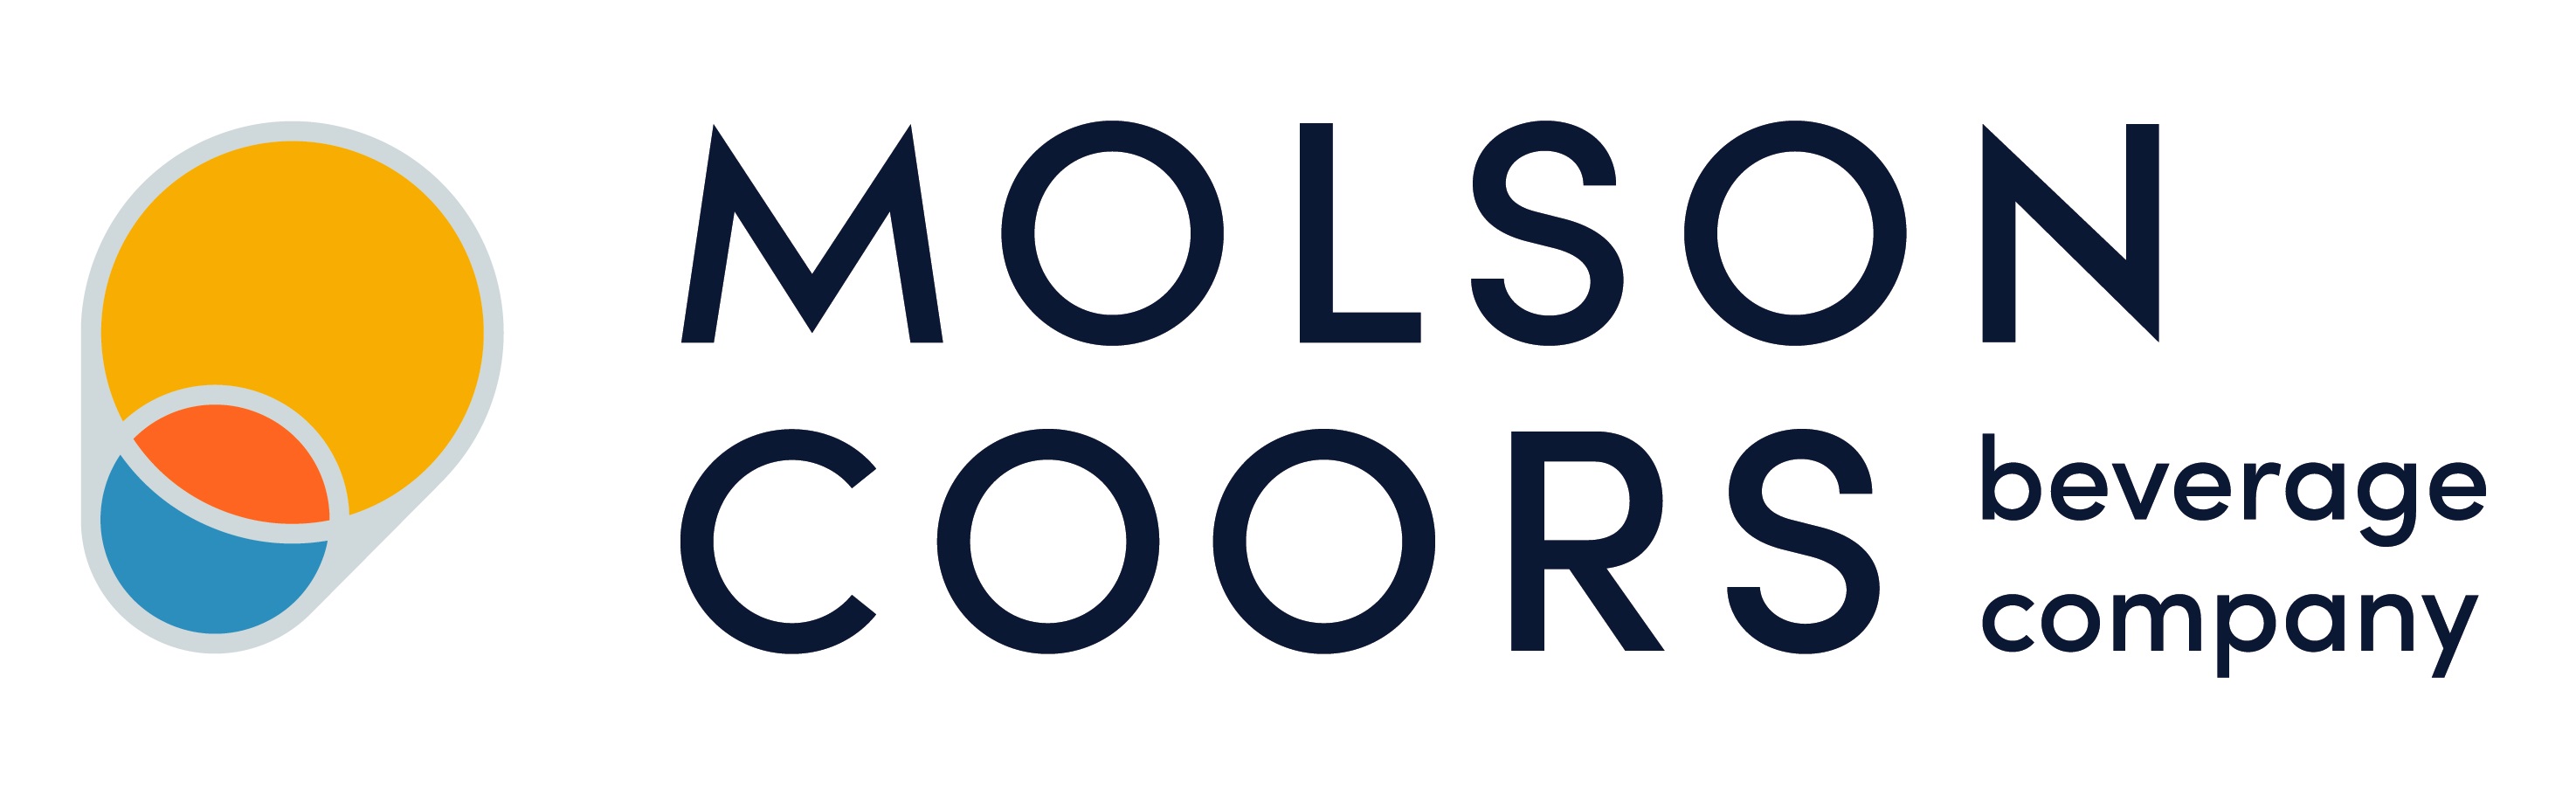 molsoncoors_logo